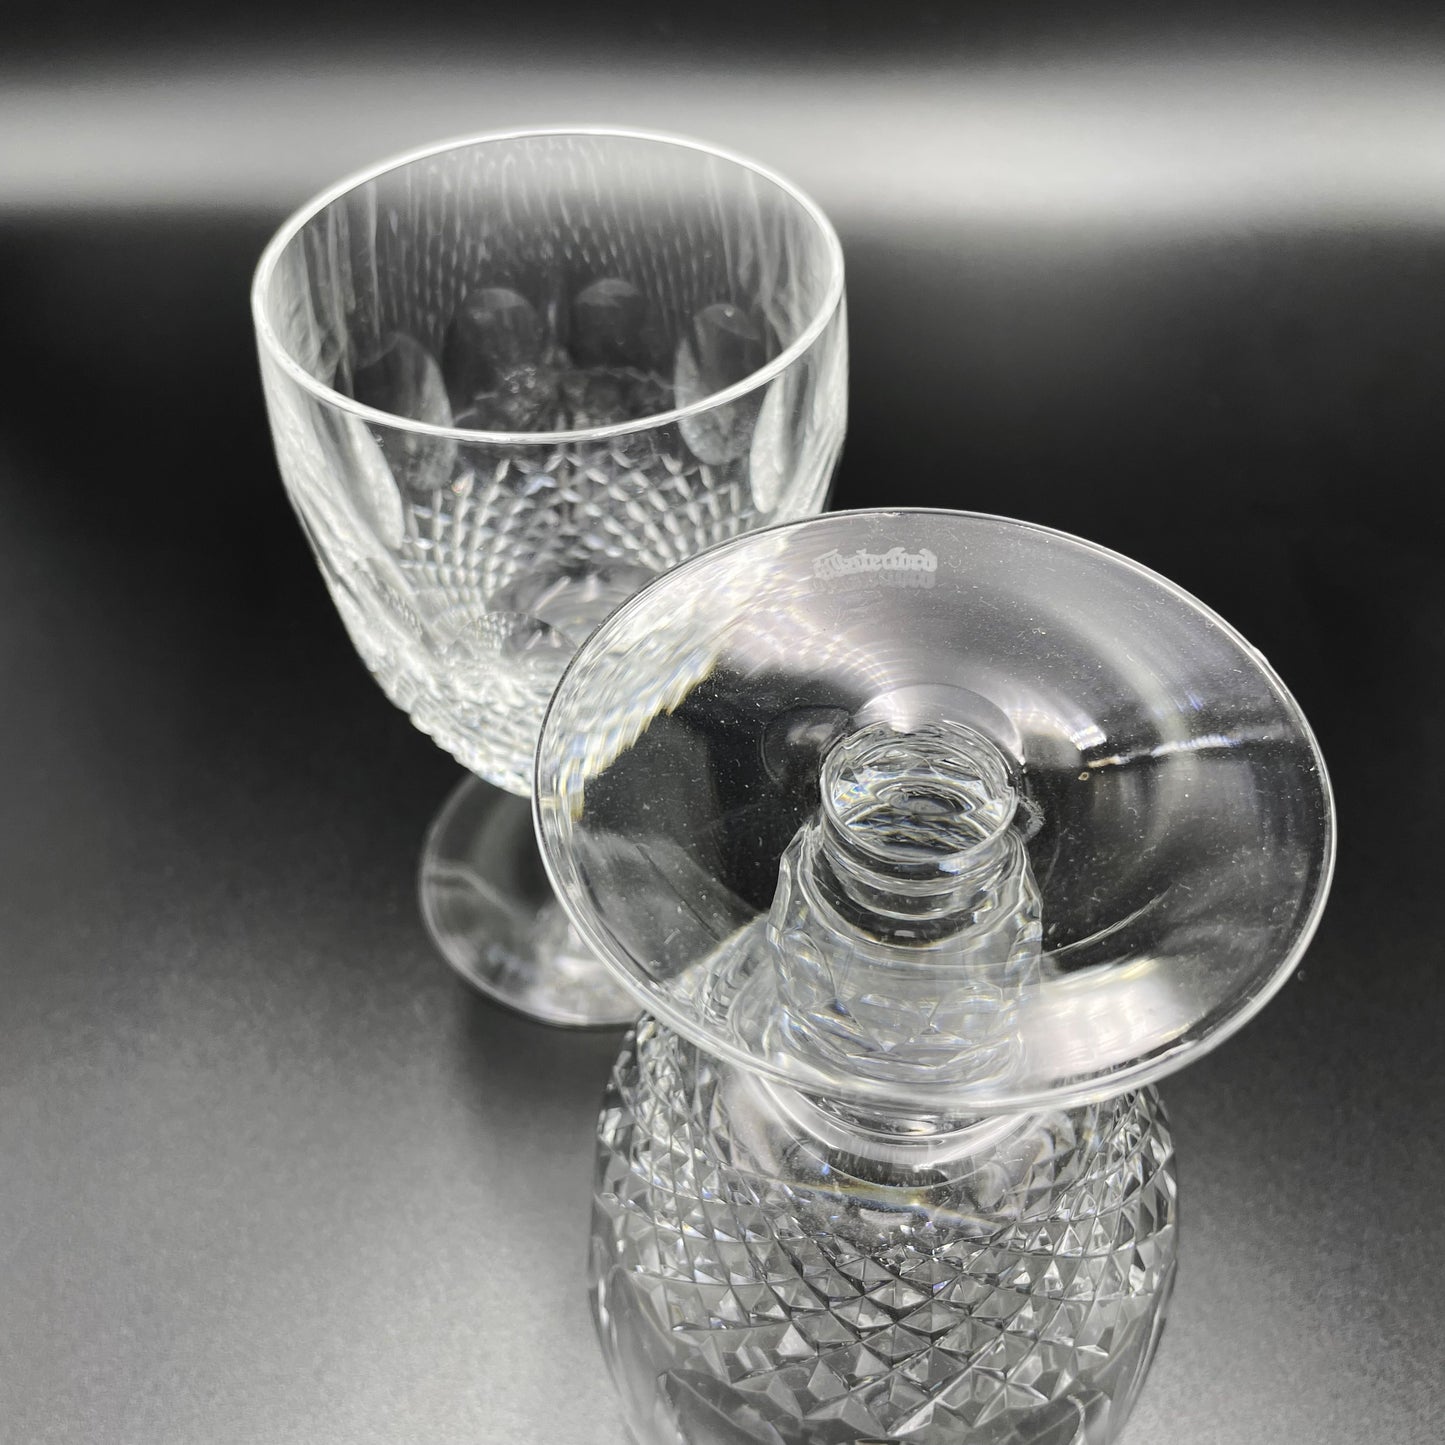 Waterford Crystal Colleen Short Stem Water Goblet Pair